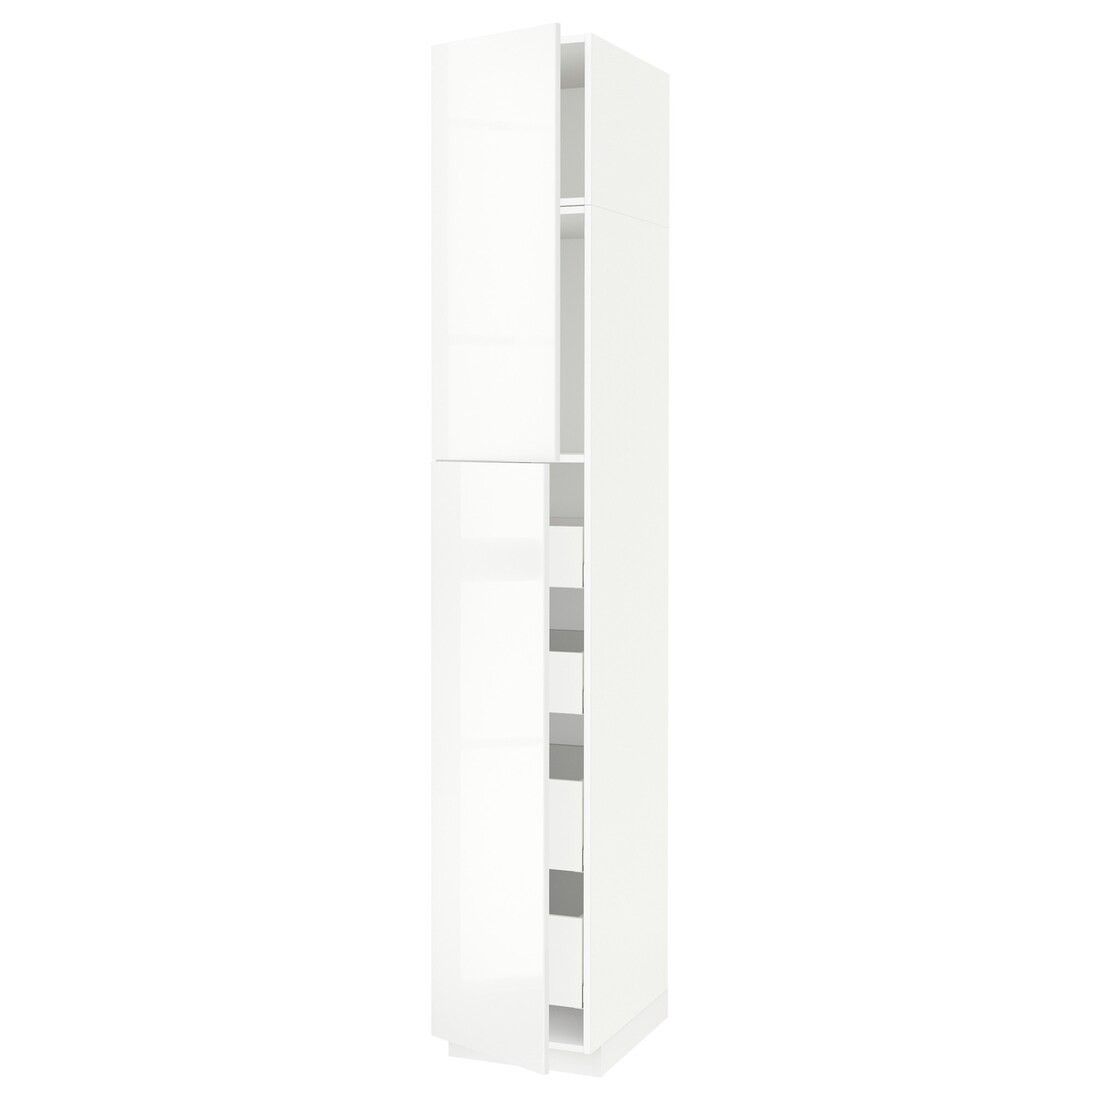 IKEA METOD МЕТОД / MAXIMERA МАКСИМЕРА Шкаф высокий 2 двери / 4 ящика, белый / Ringhult белый, 40x60x240 см 99466368 | 994.663.68